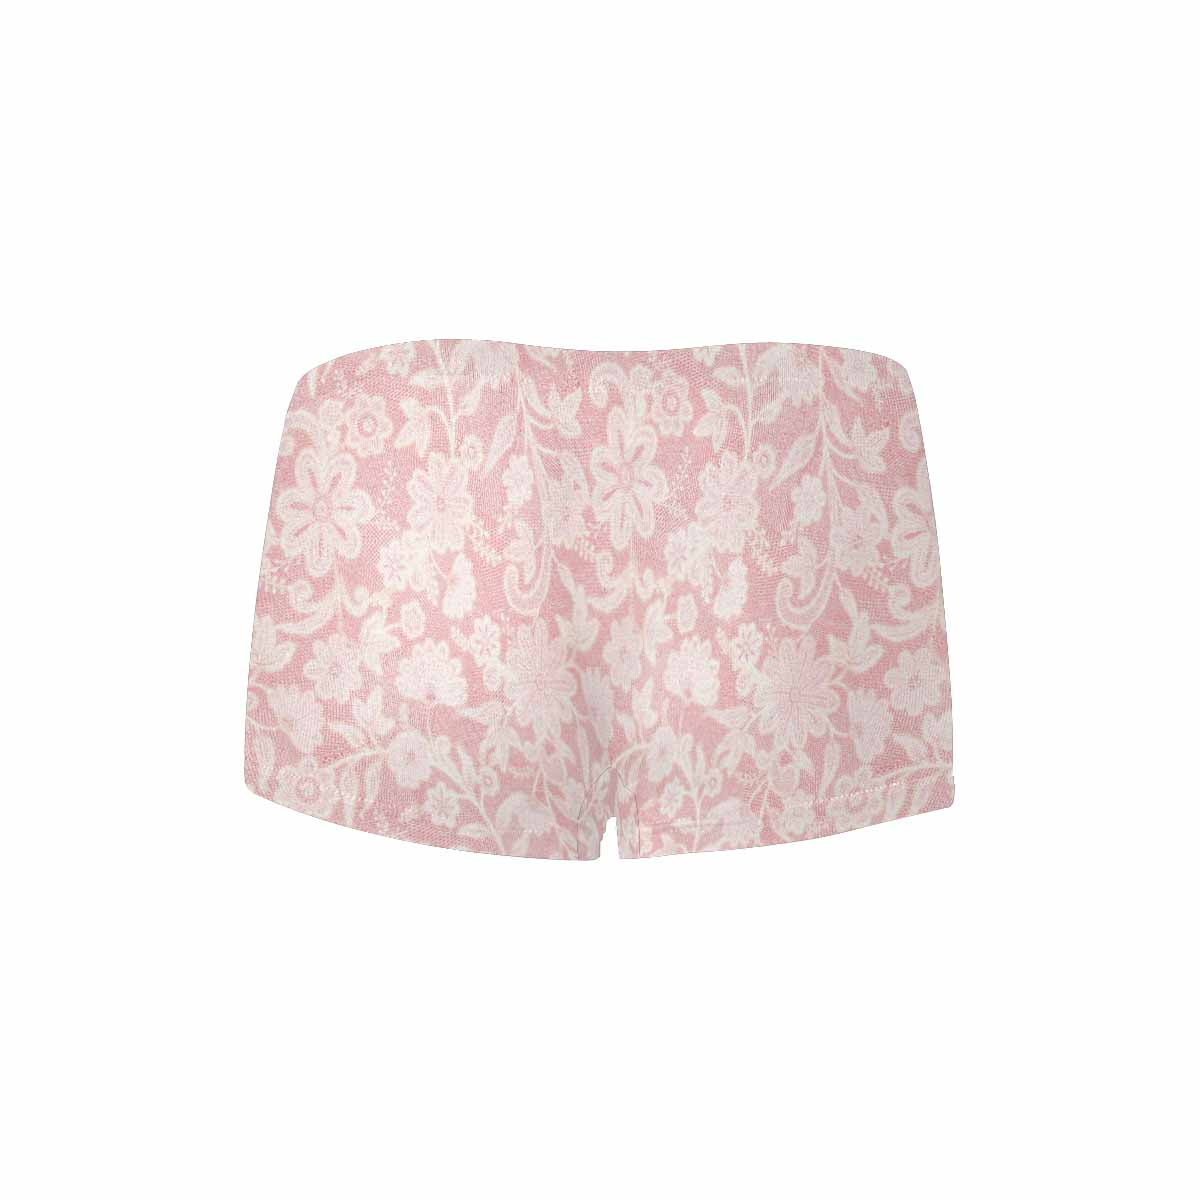 Floral 2, boyshorts, daisy dukes, pum pum shorts, panties, design 06